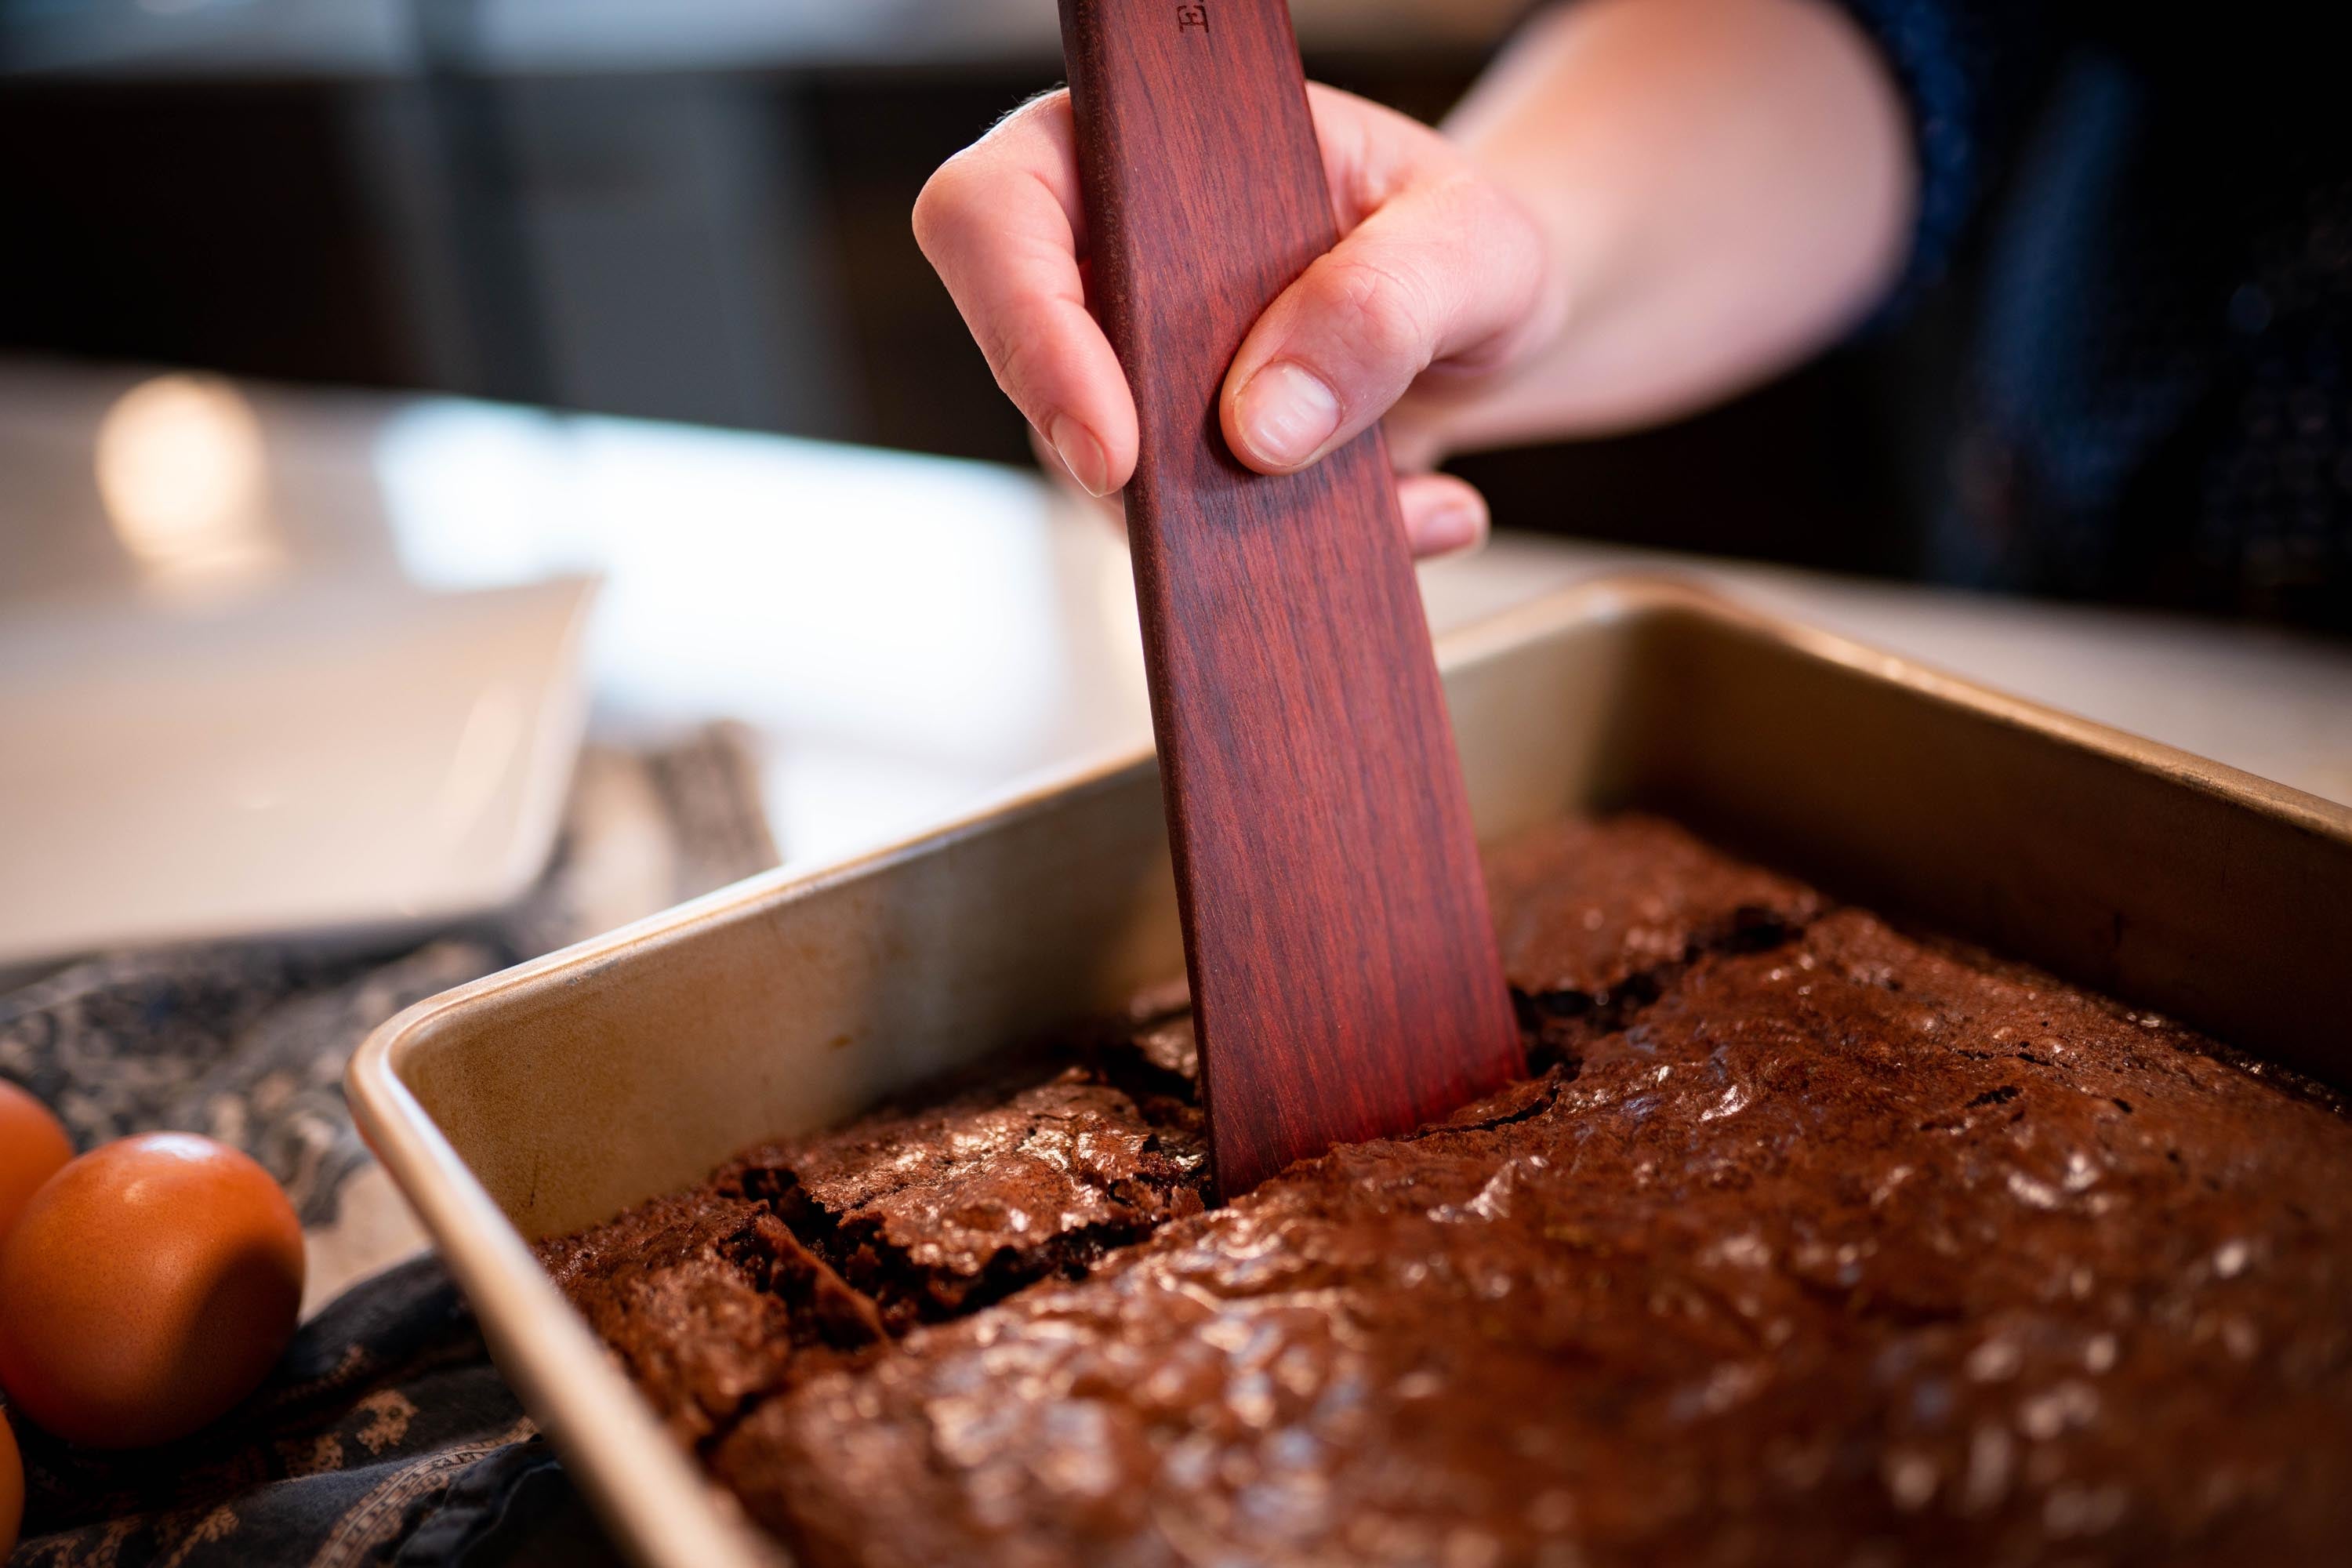 Using the wooden Tera Scraper to serve brownies